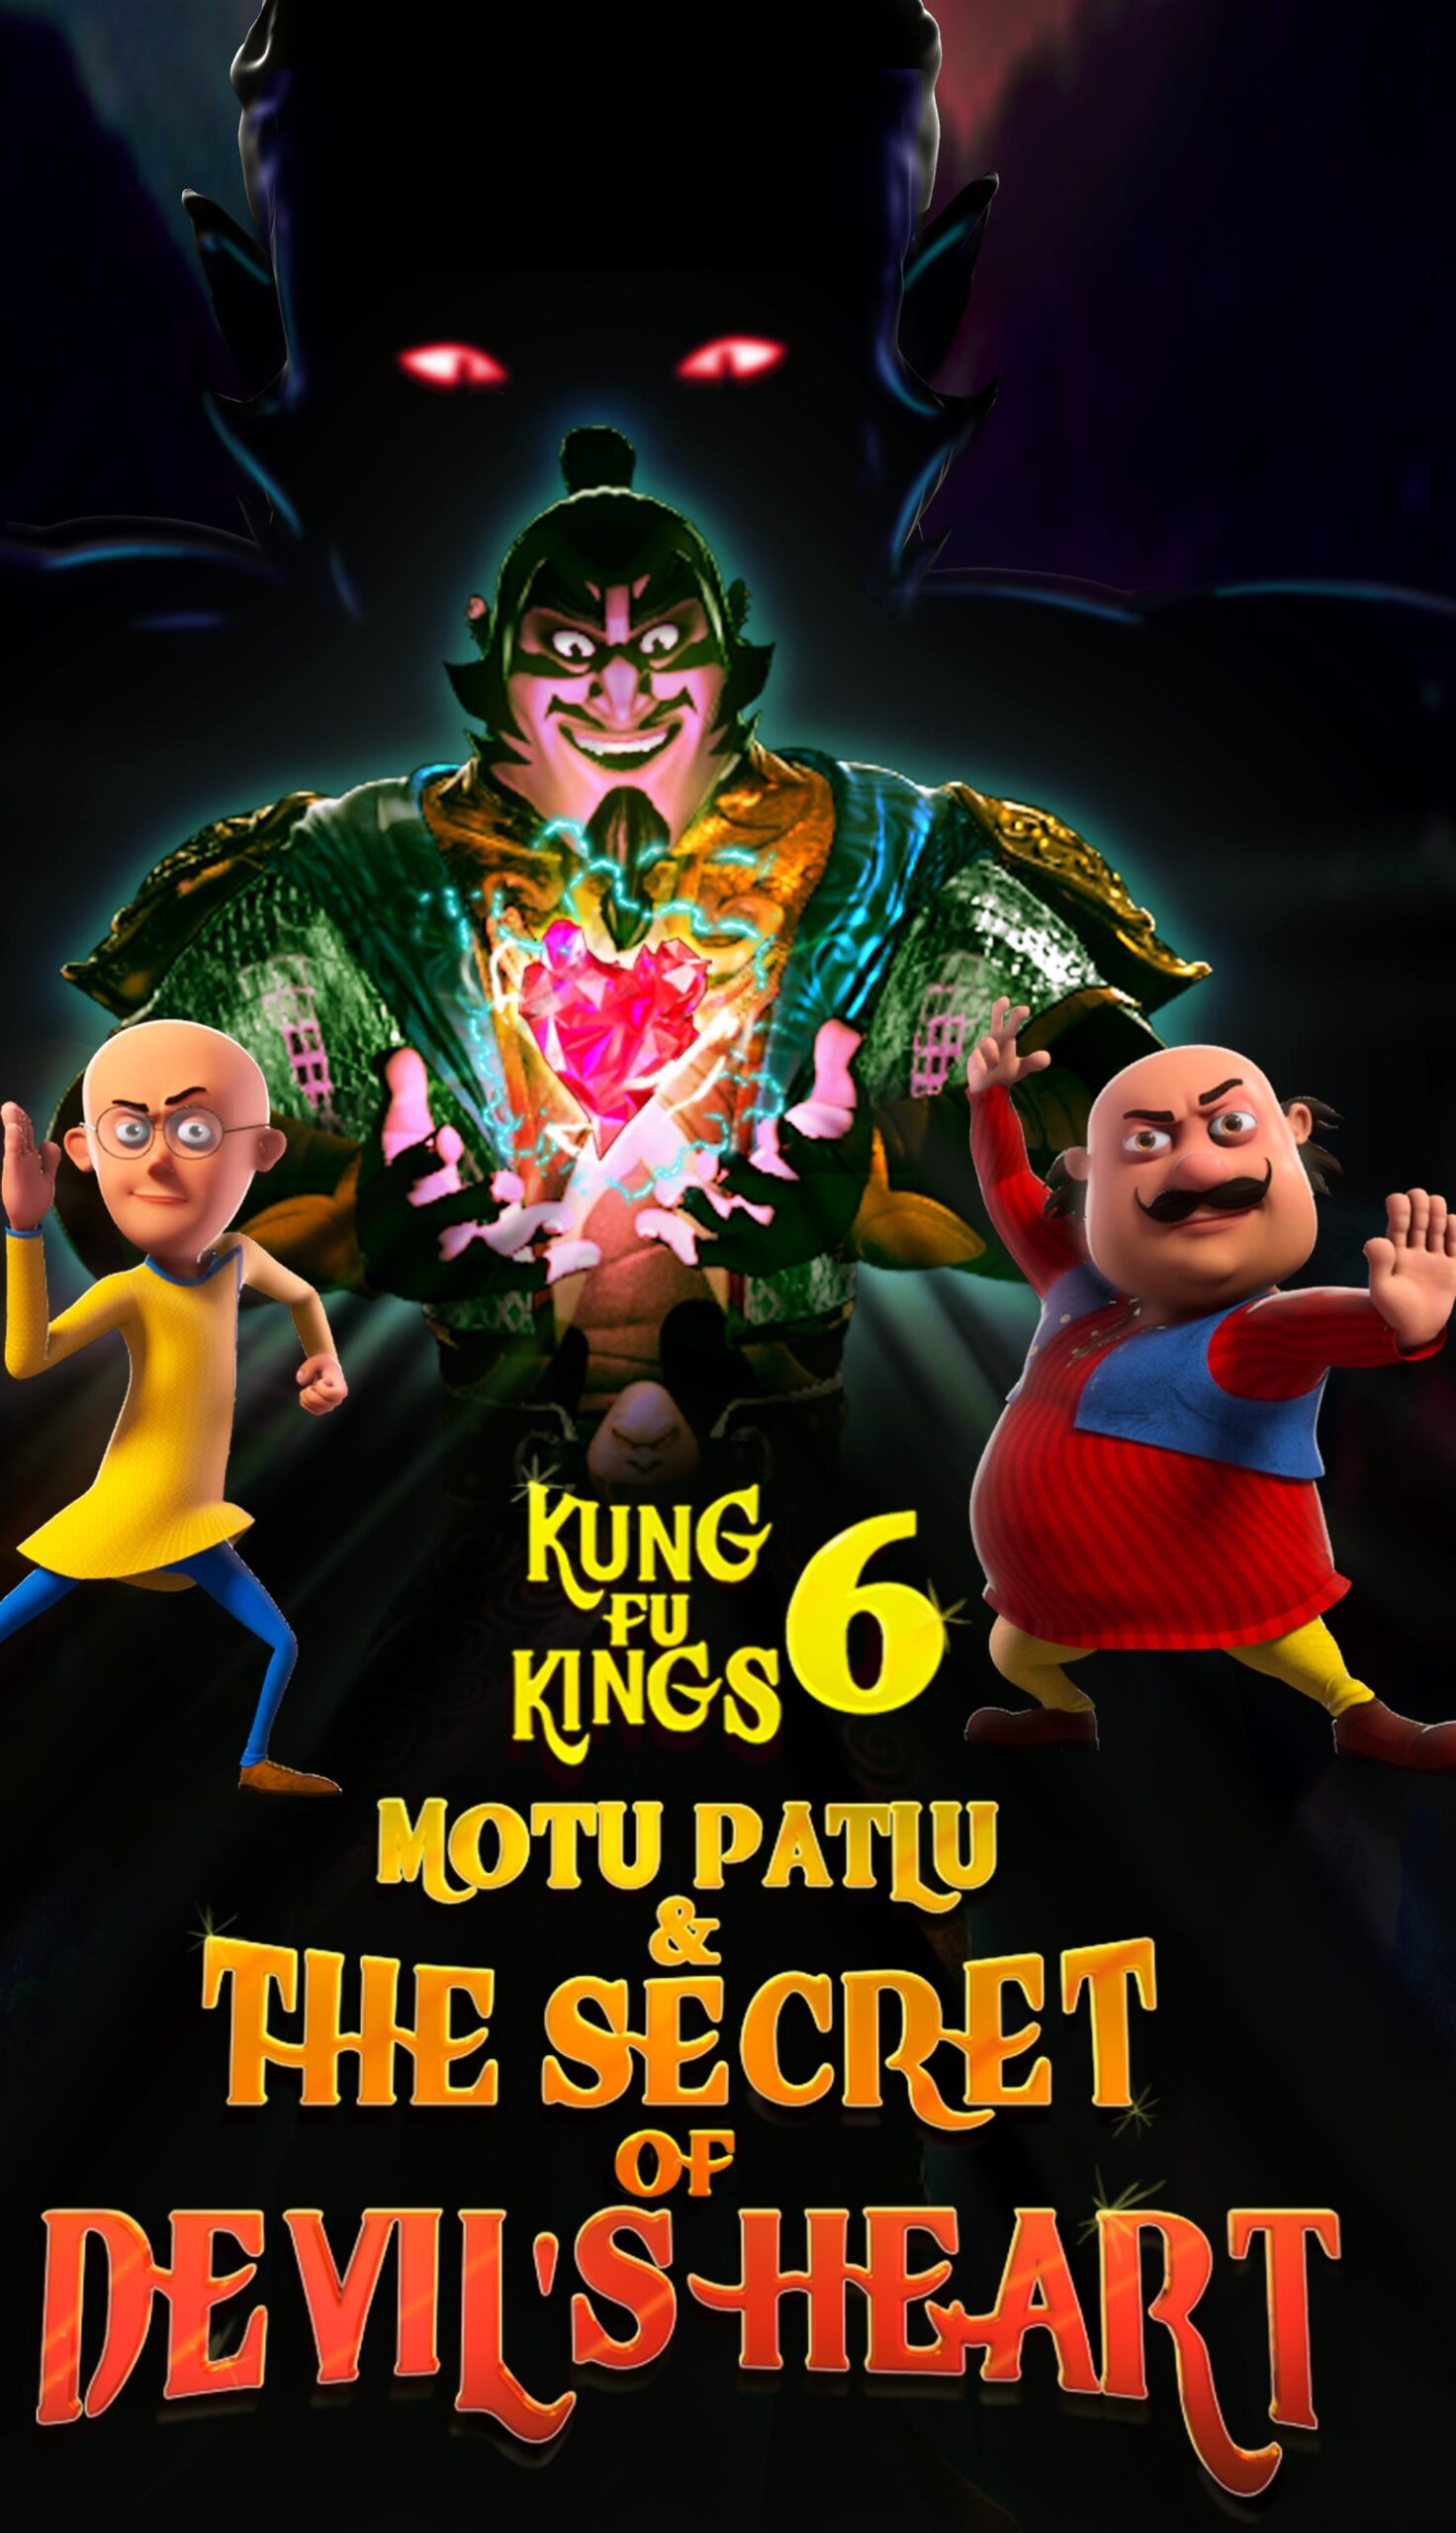 Watch Motu Patlu and The Secret of Devils Heart 2022 Tamil Dubbed Online  Movie Free 720p